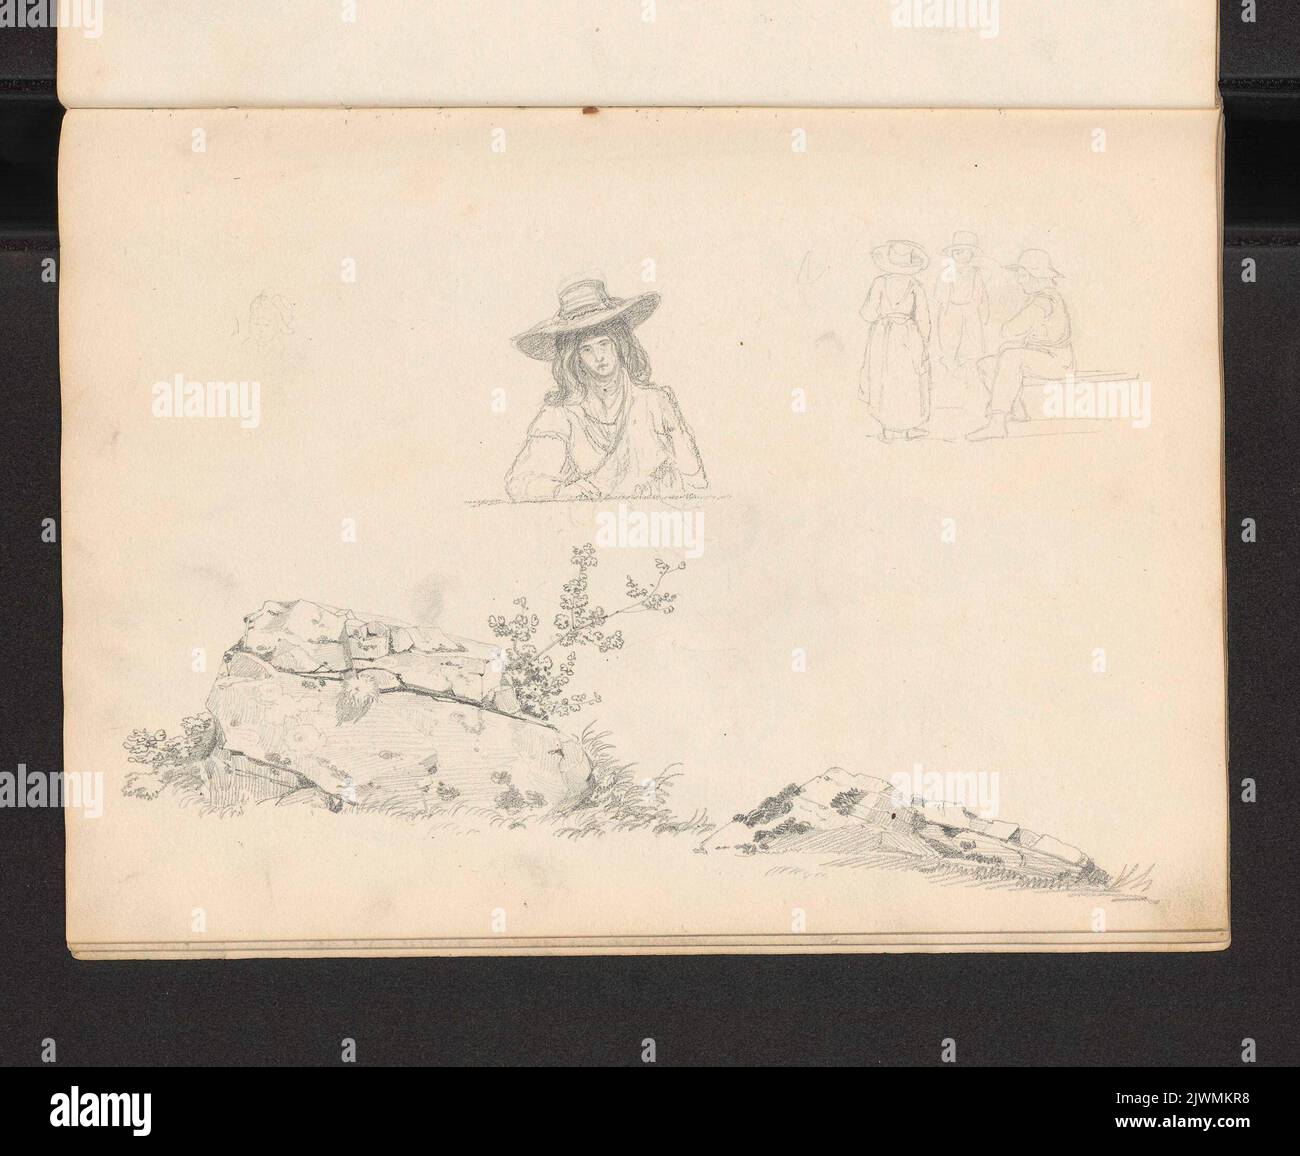 Trzy szkice: Kamienie porośnięte roślinnością, popiersie kobpiersie W kapeluszu, grupa postaci. Blaschnik, Arthur (1823-1918), dessinateur, dessinateur Banque D'Images